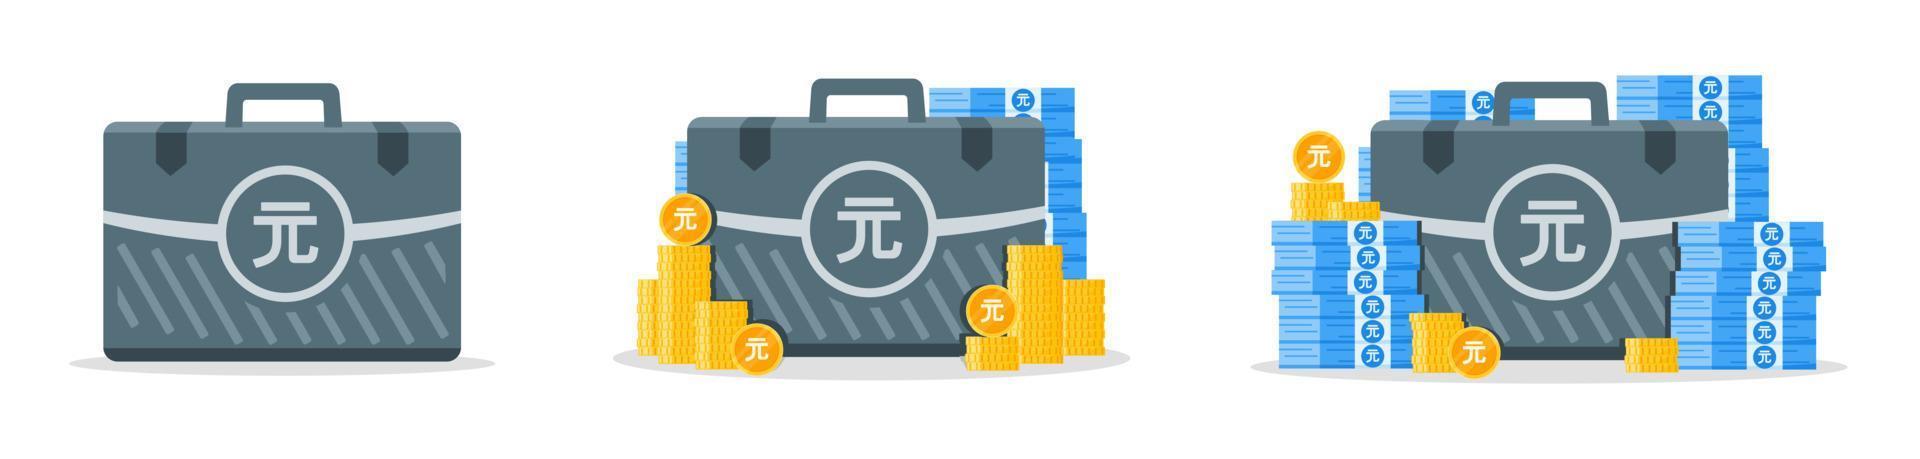 neue taiwan-dollar-geldkastensymbole vektor